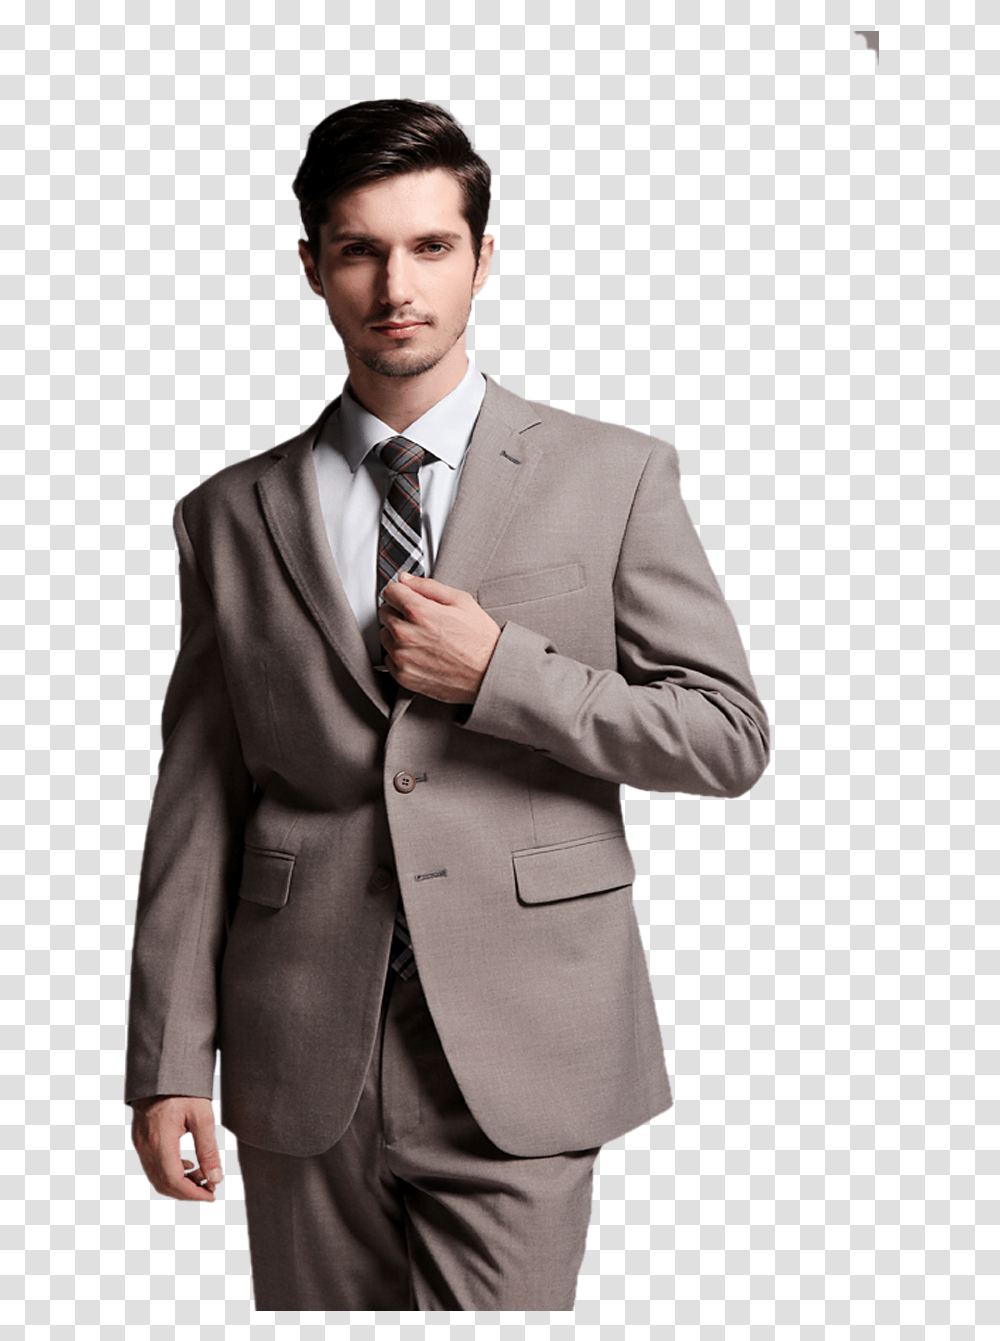 Suit Images Free Download Man Coat Pant, Clothing, Apparel, Overcoat, Tie Transparent Png